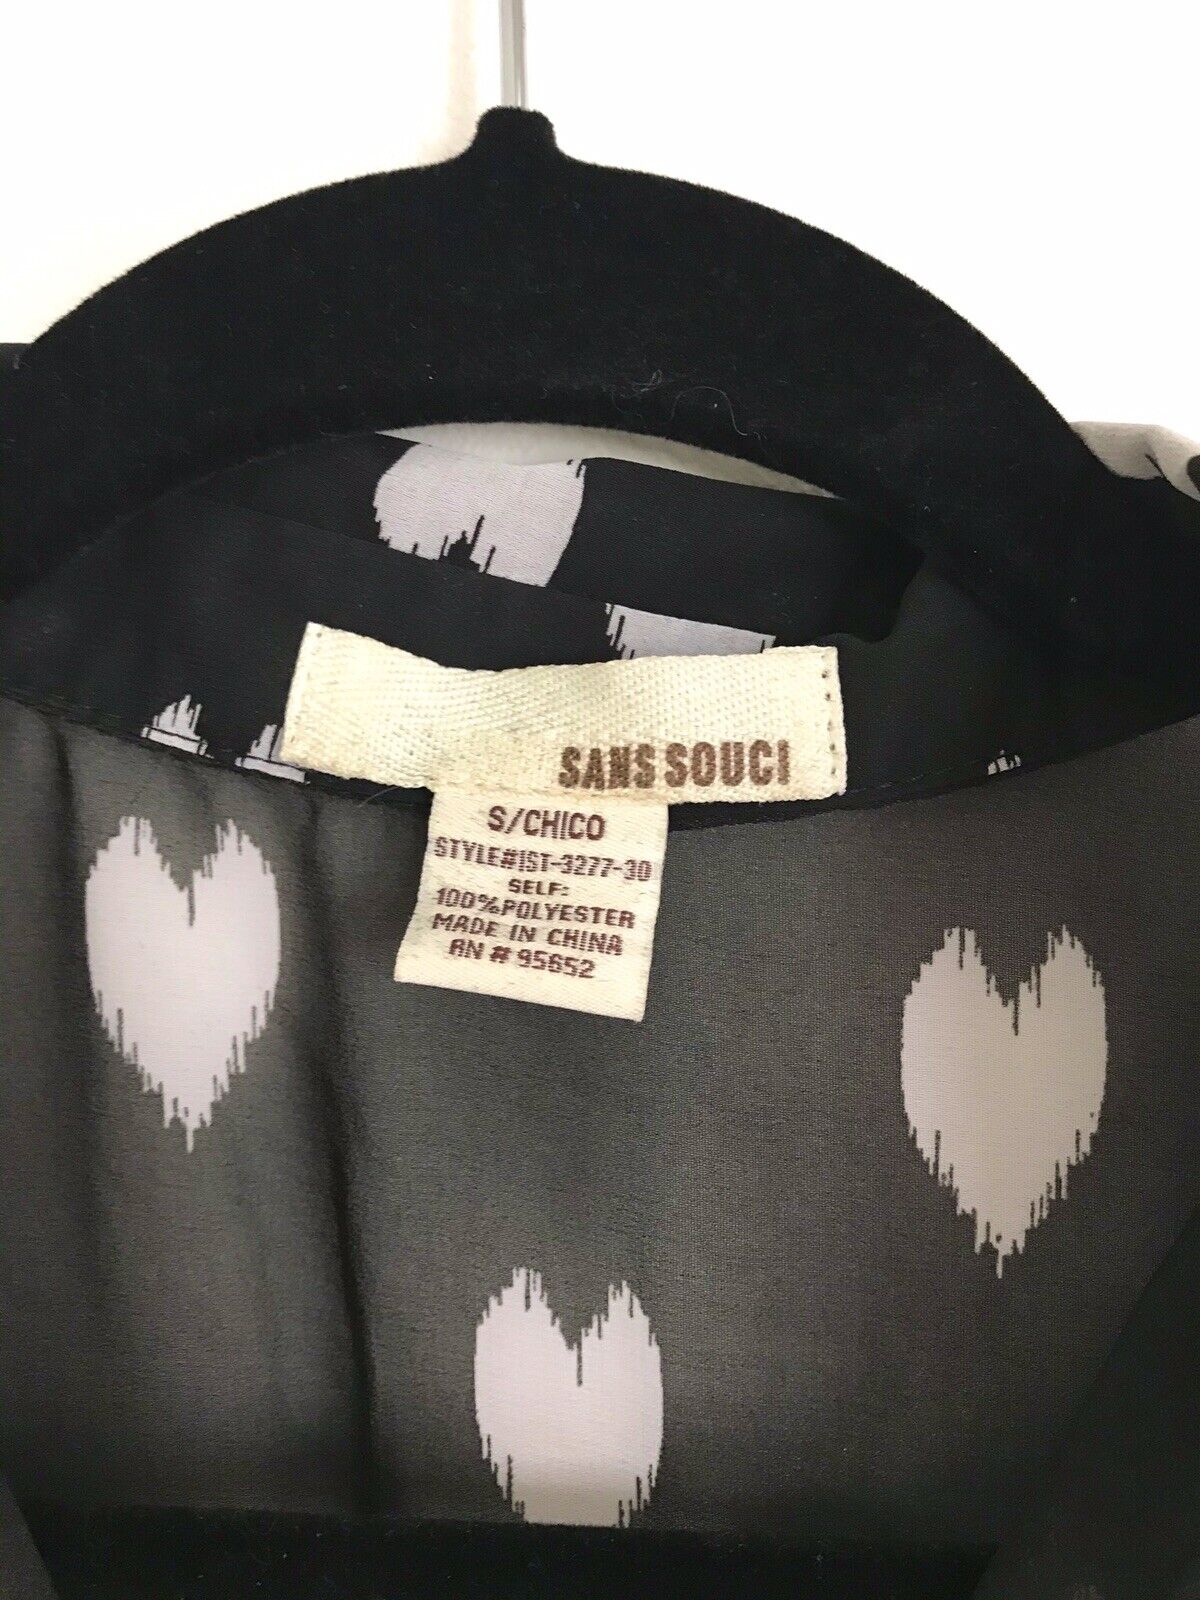 New SAN SOUCI Heart Black Shirt Longline Sleeveless Top Size S | eBay